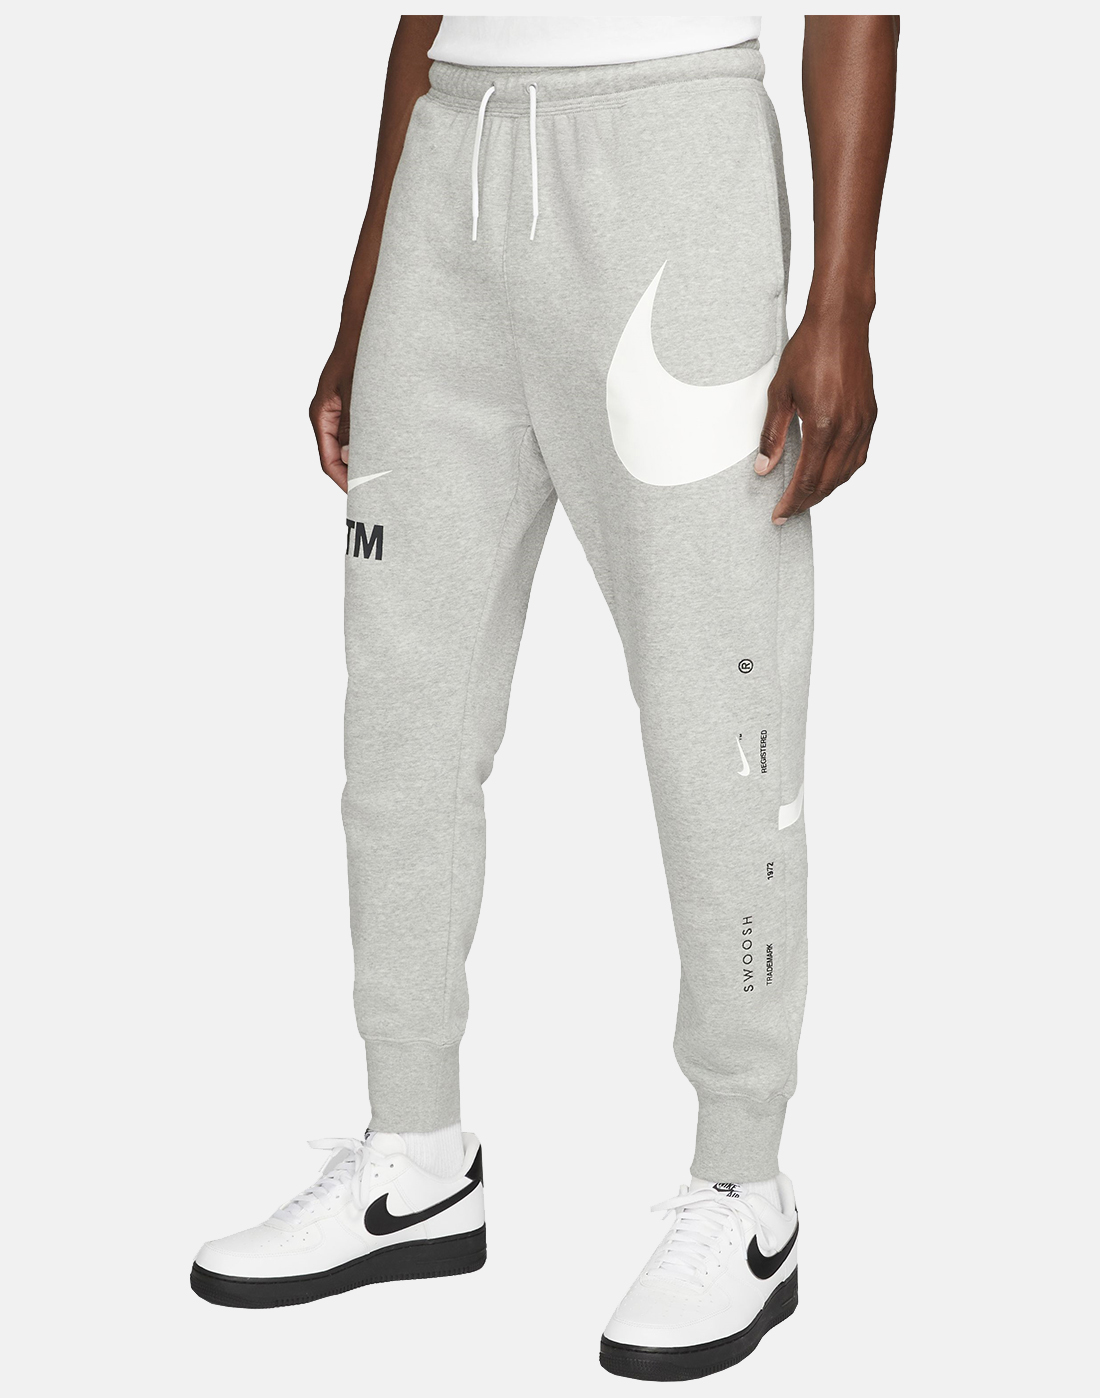 Nike Mens Swoosh Fleece Pants - Grey | Life Style Sports EU